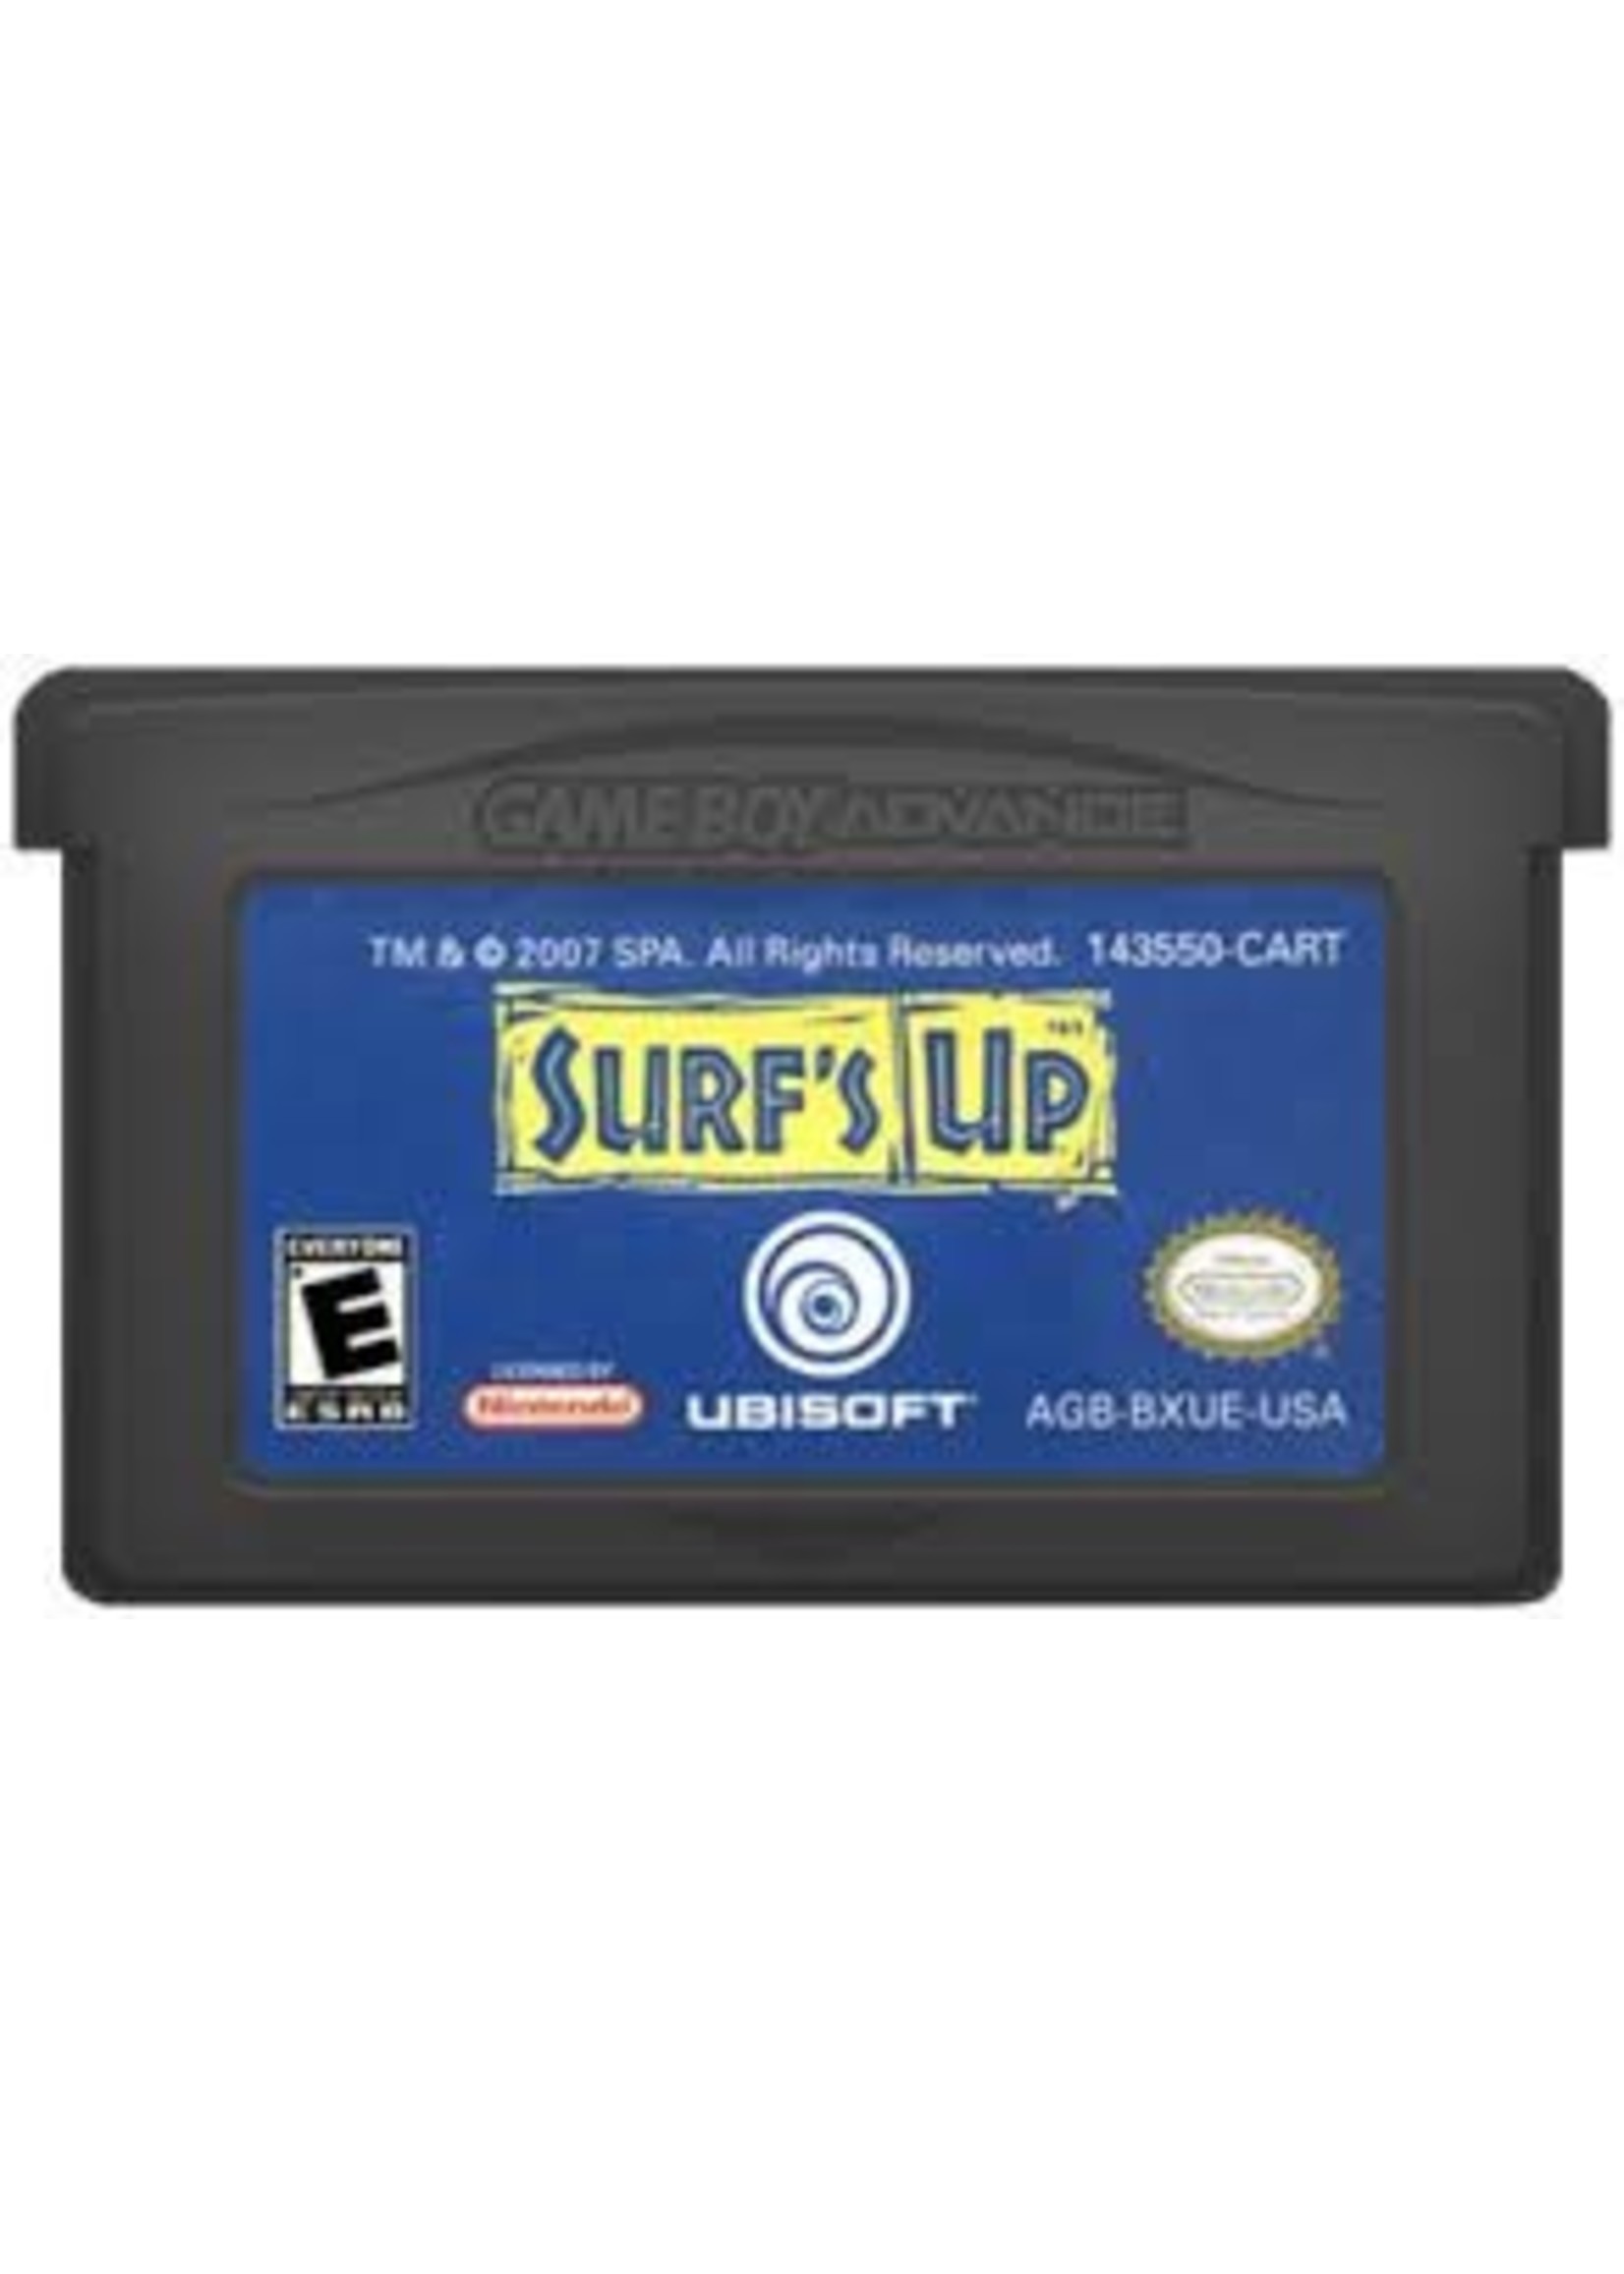 Nintendo Gameboy Advance Surf's Up